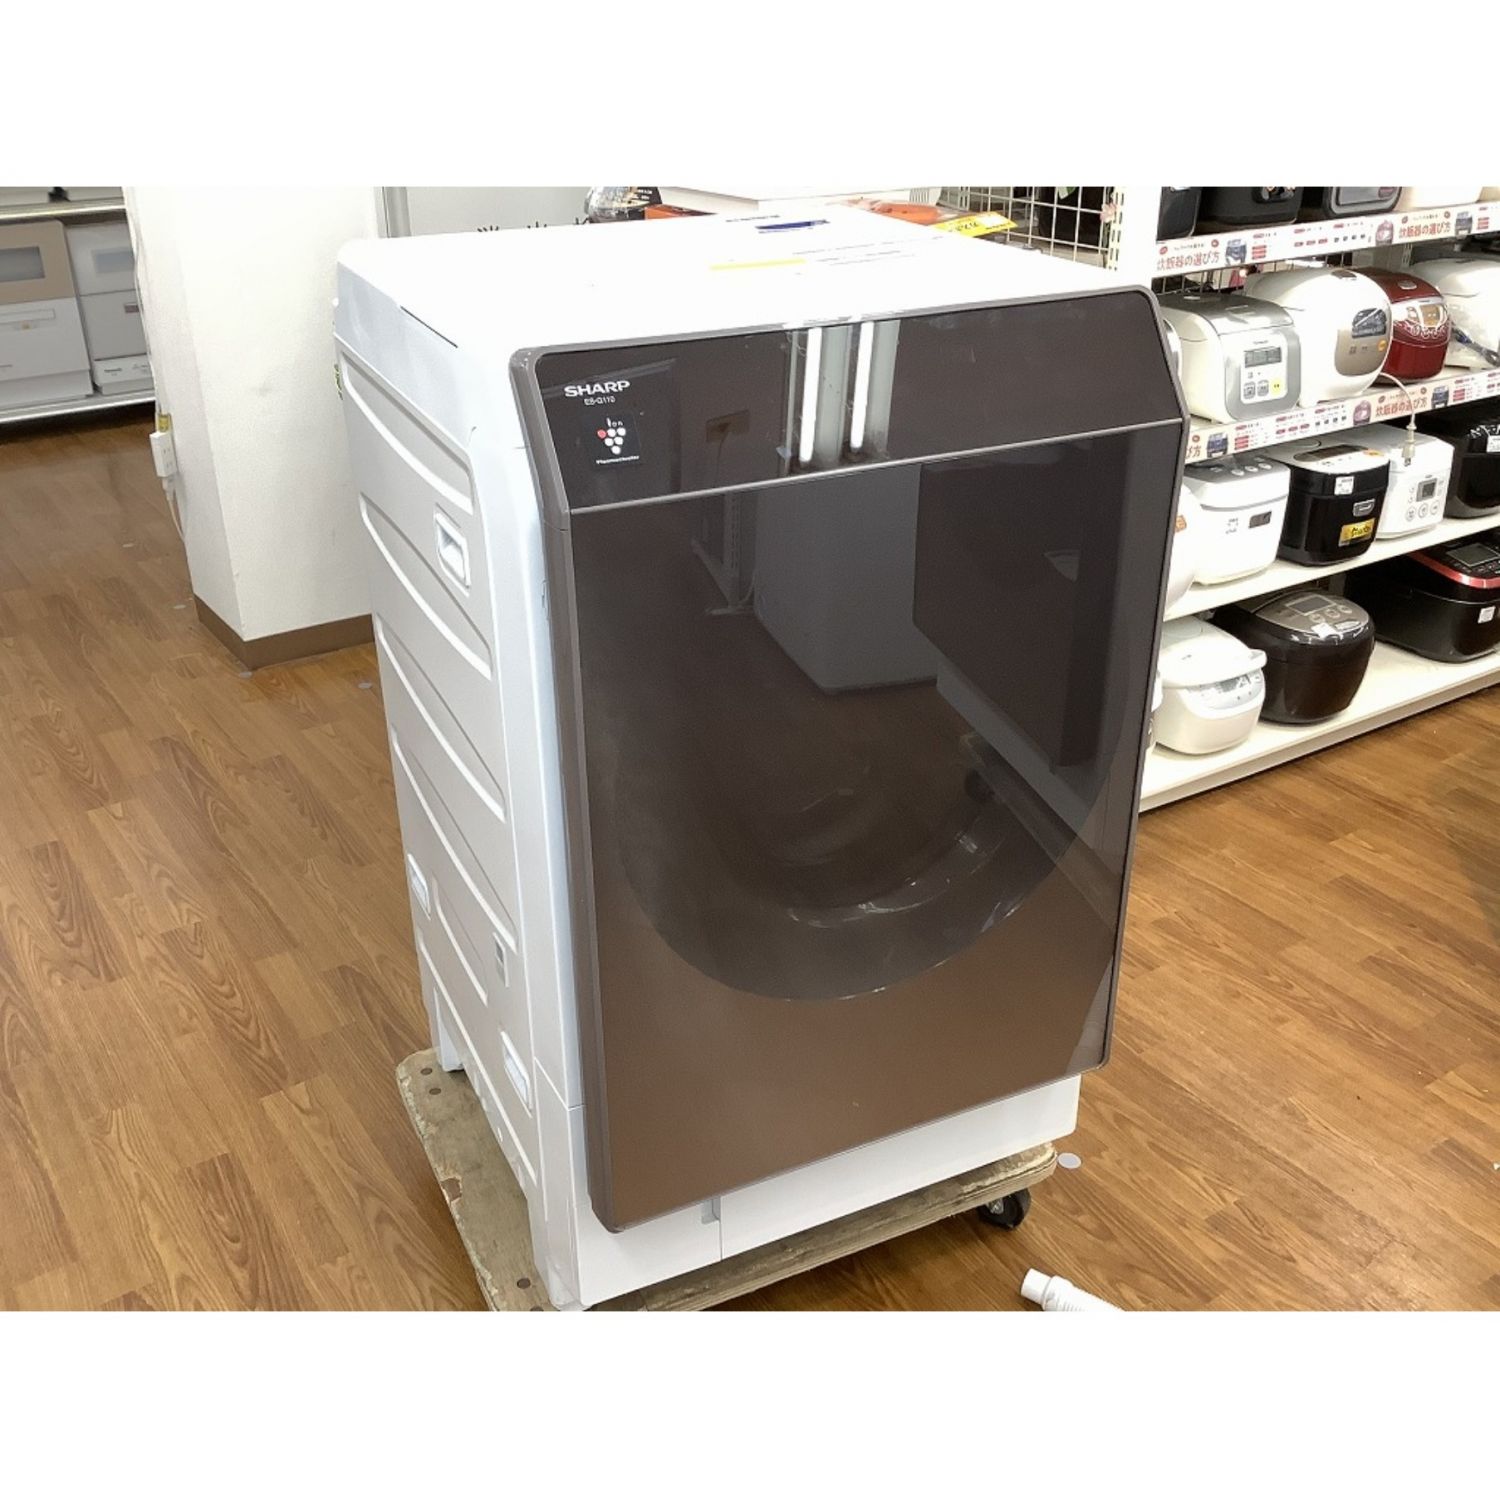 SHARP (シャープ) ドラム式洗濯乾燥機 11.0kg 6.0kg ES-G110-TL 2017年 